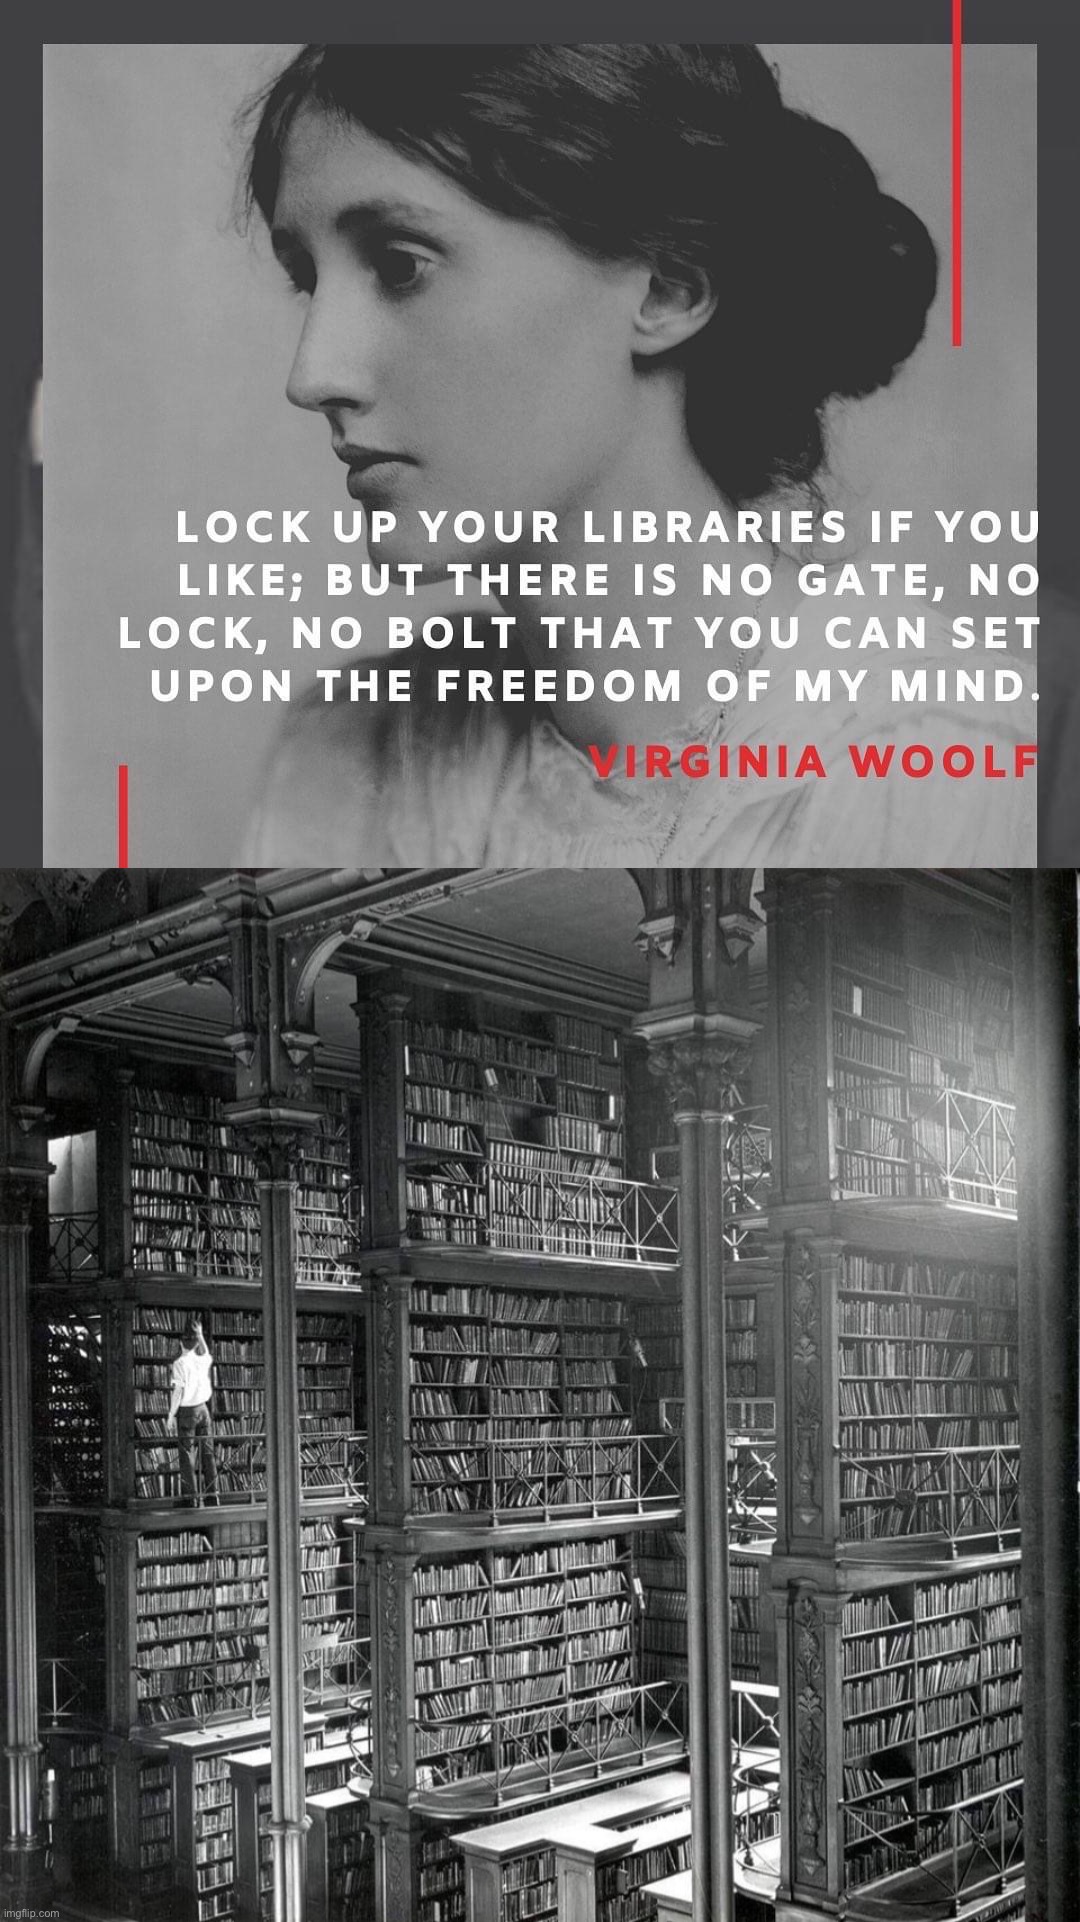 Virginia Woolf | image tagged in virginia woolf quote,cincinnati library,virginia woolf,library,sexism,freedom of speech | made w/ Imgflip meme maker